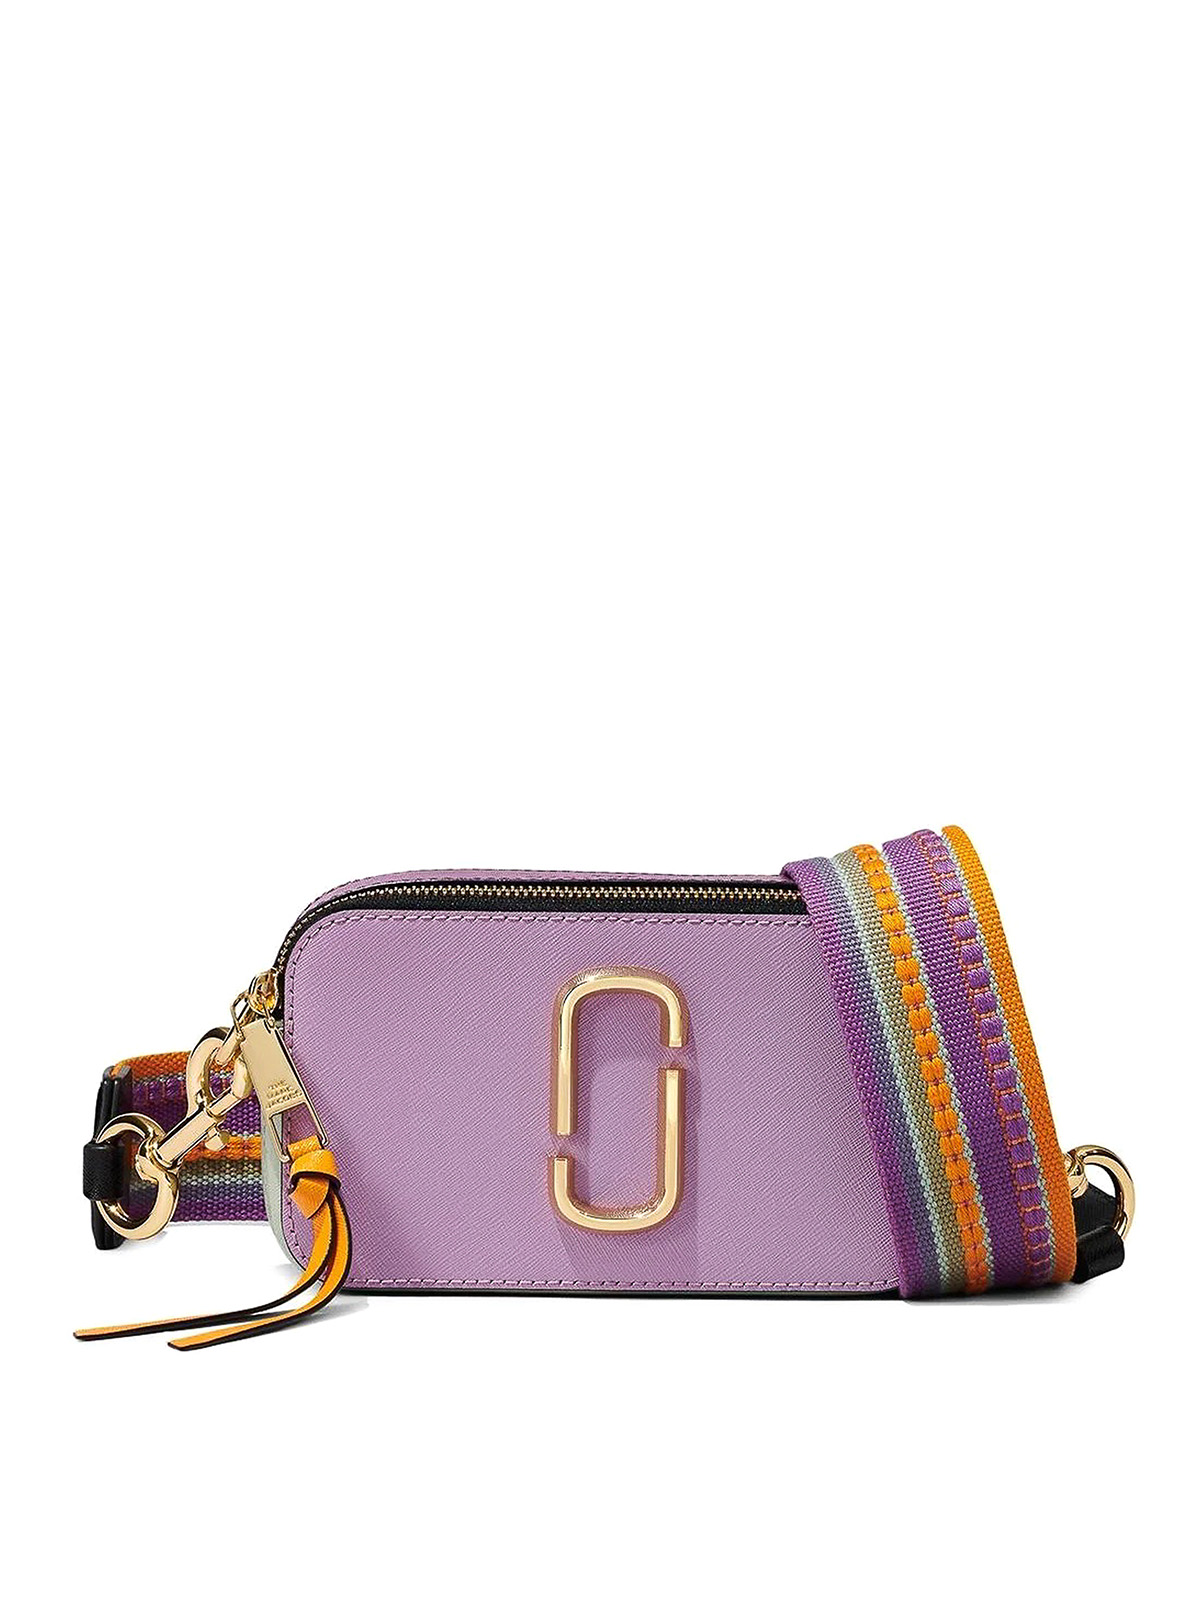 Marc Jacobs Colorblock Snapshot Shoulder Bag in Purple